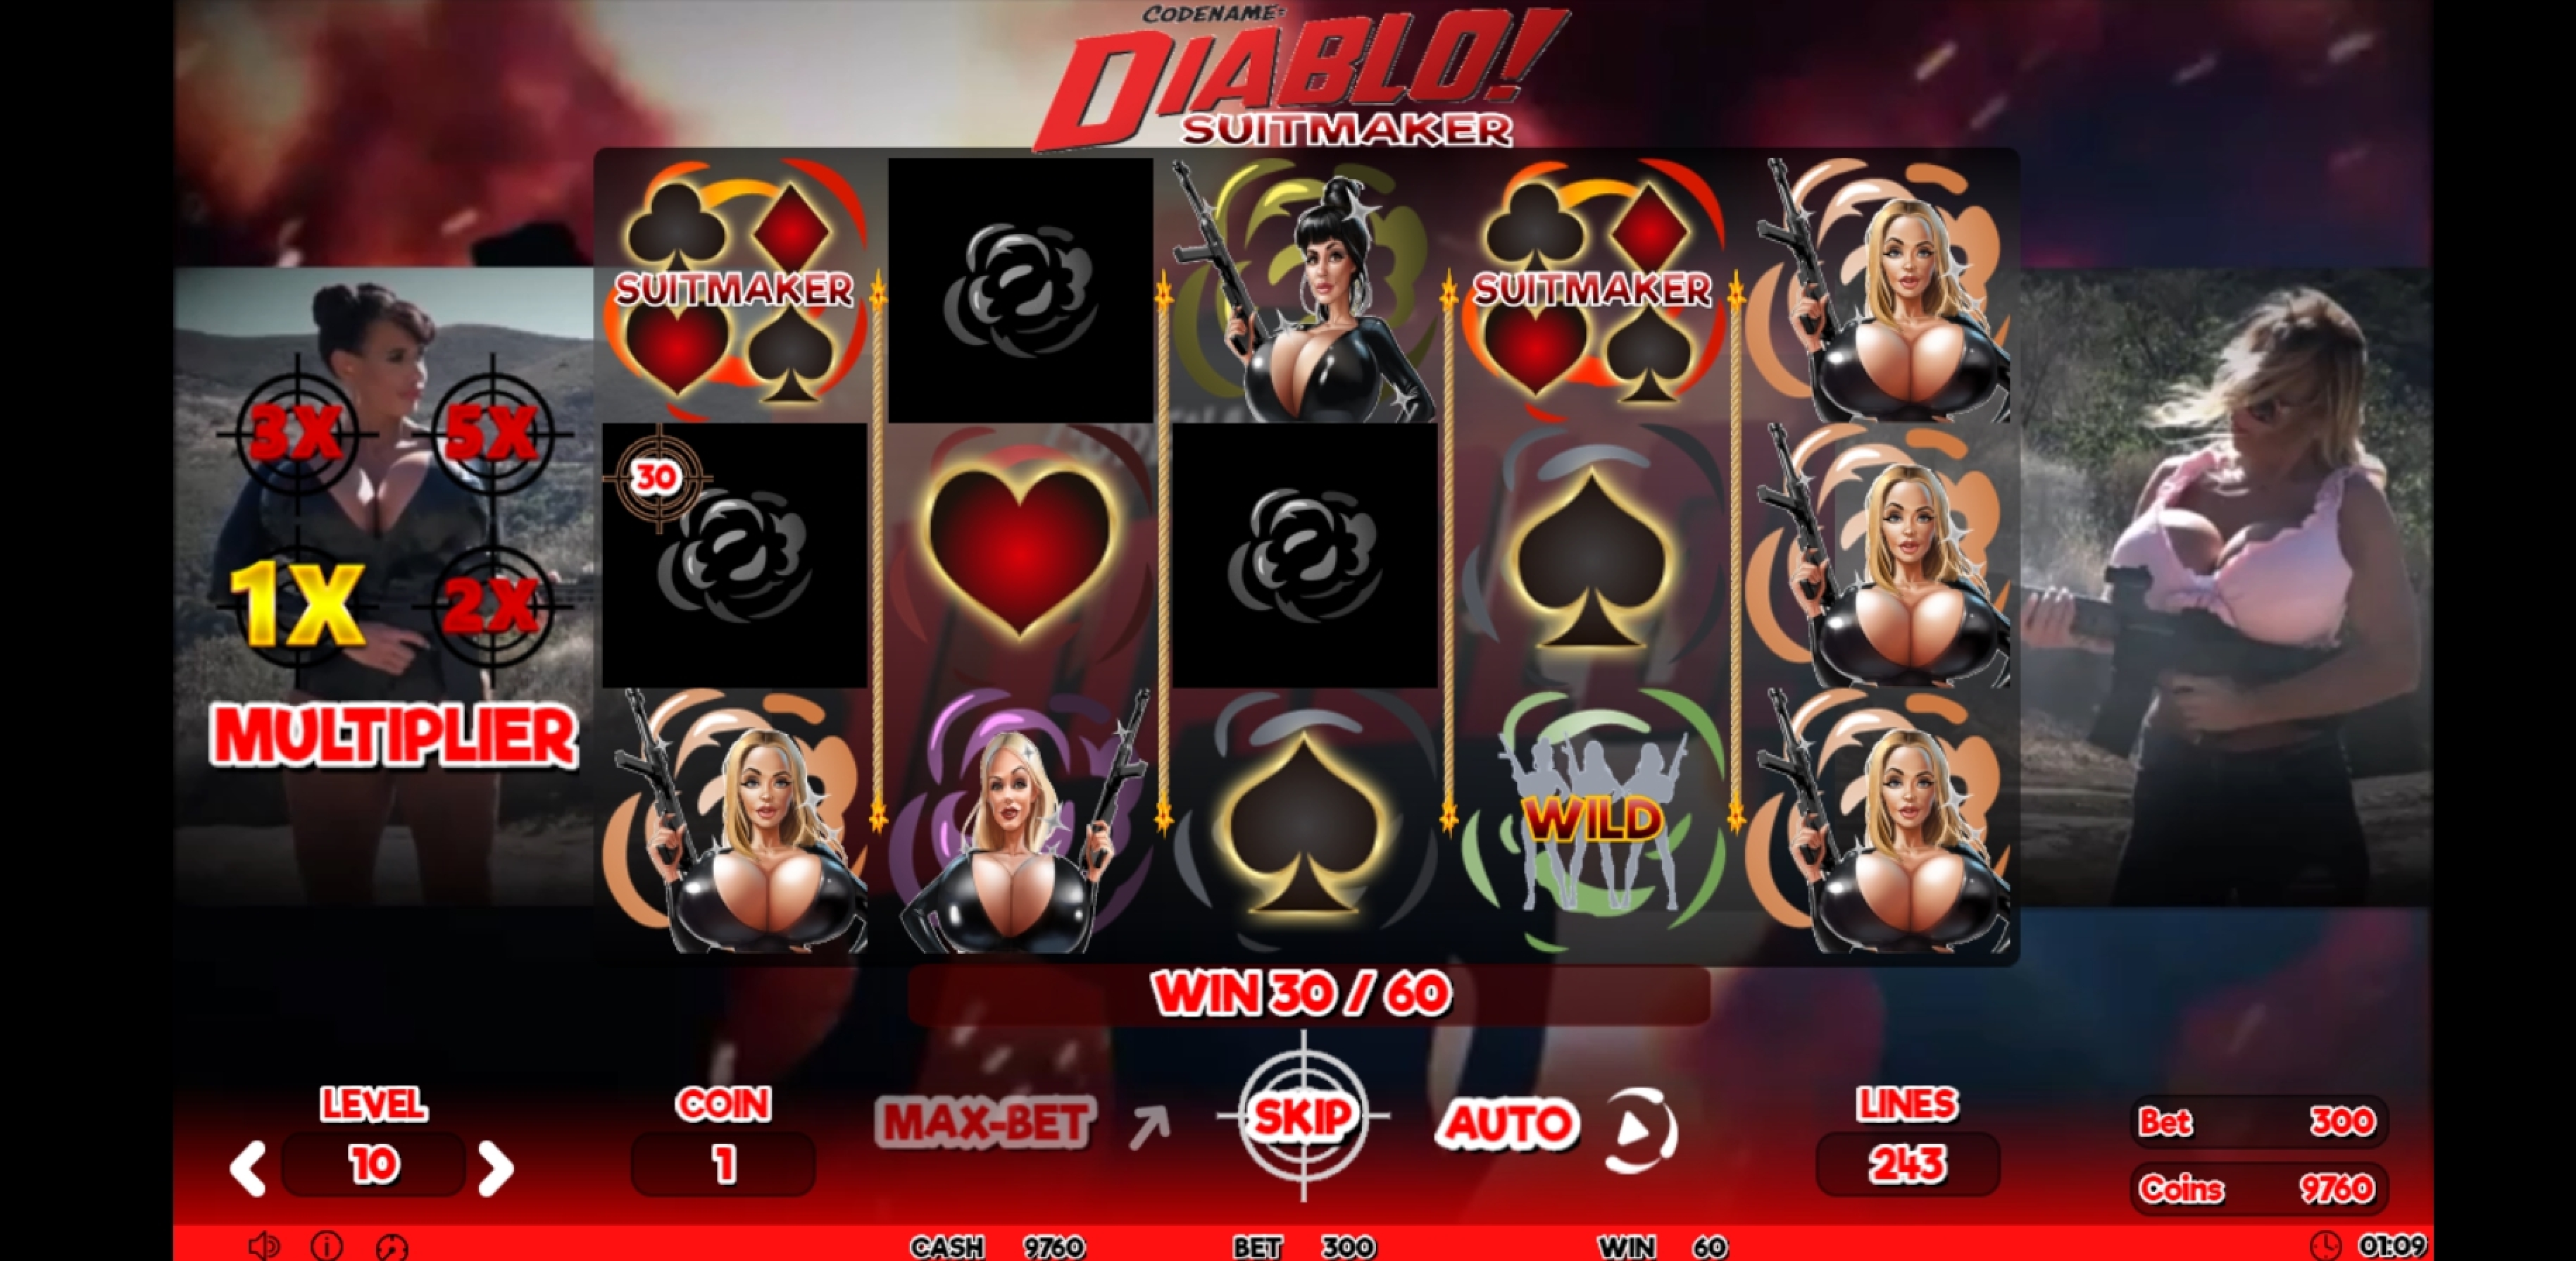 Win Money in Codename Diablo Suitmaker Free Slot Game by Skyrocket Entertainment